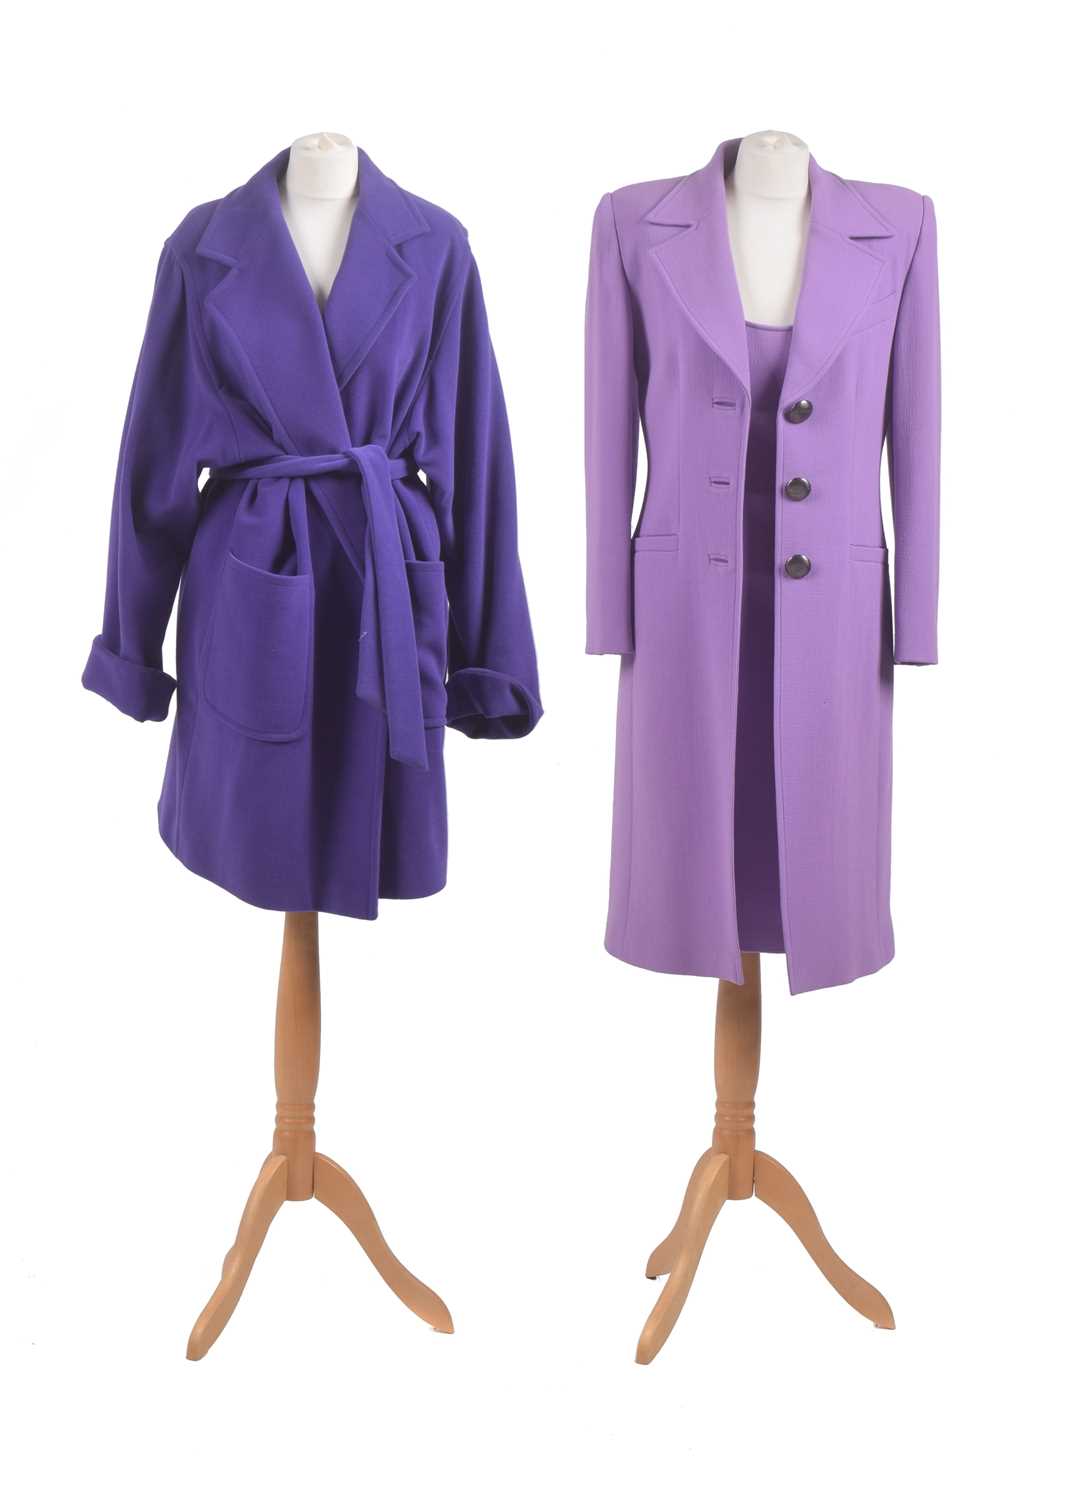 Lot 99 - Two designer coats